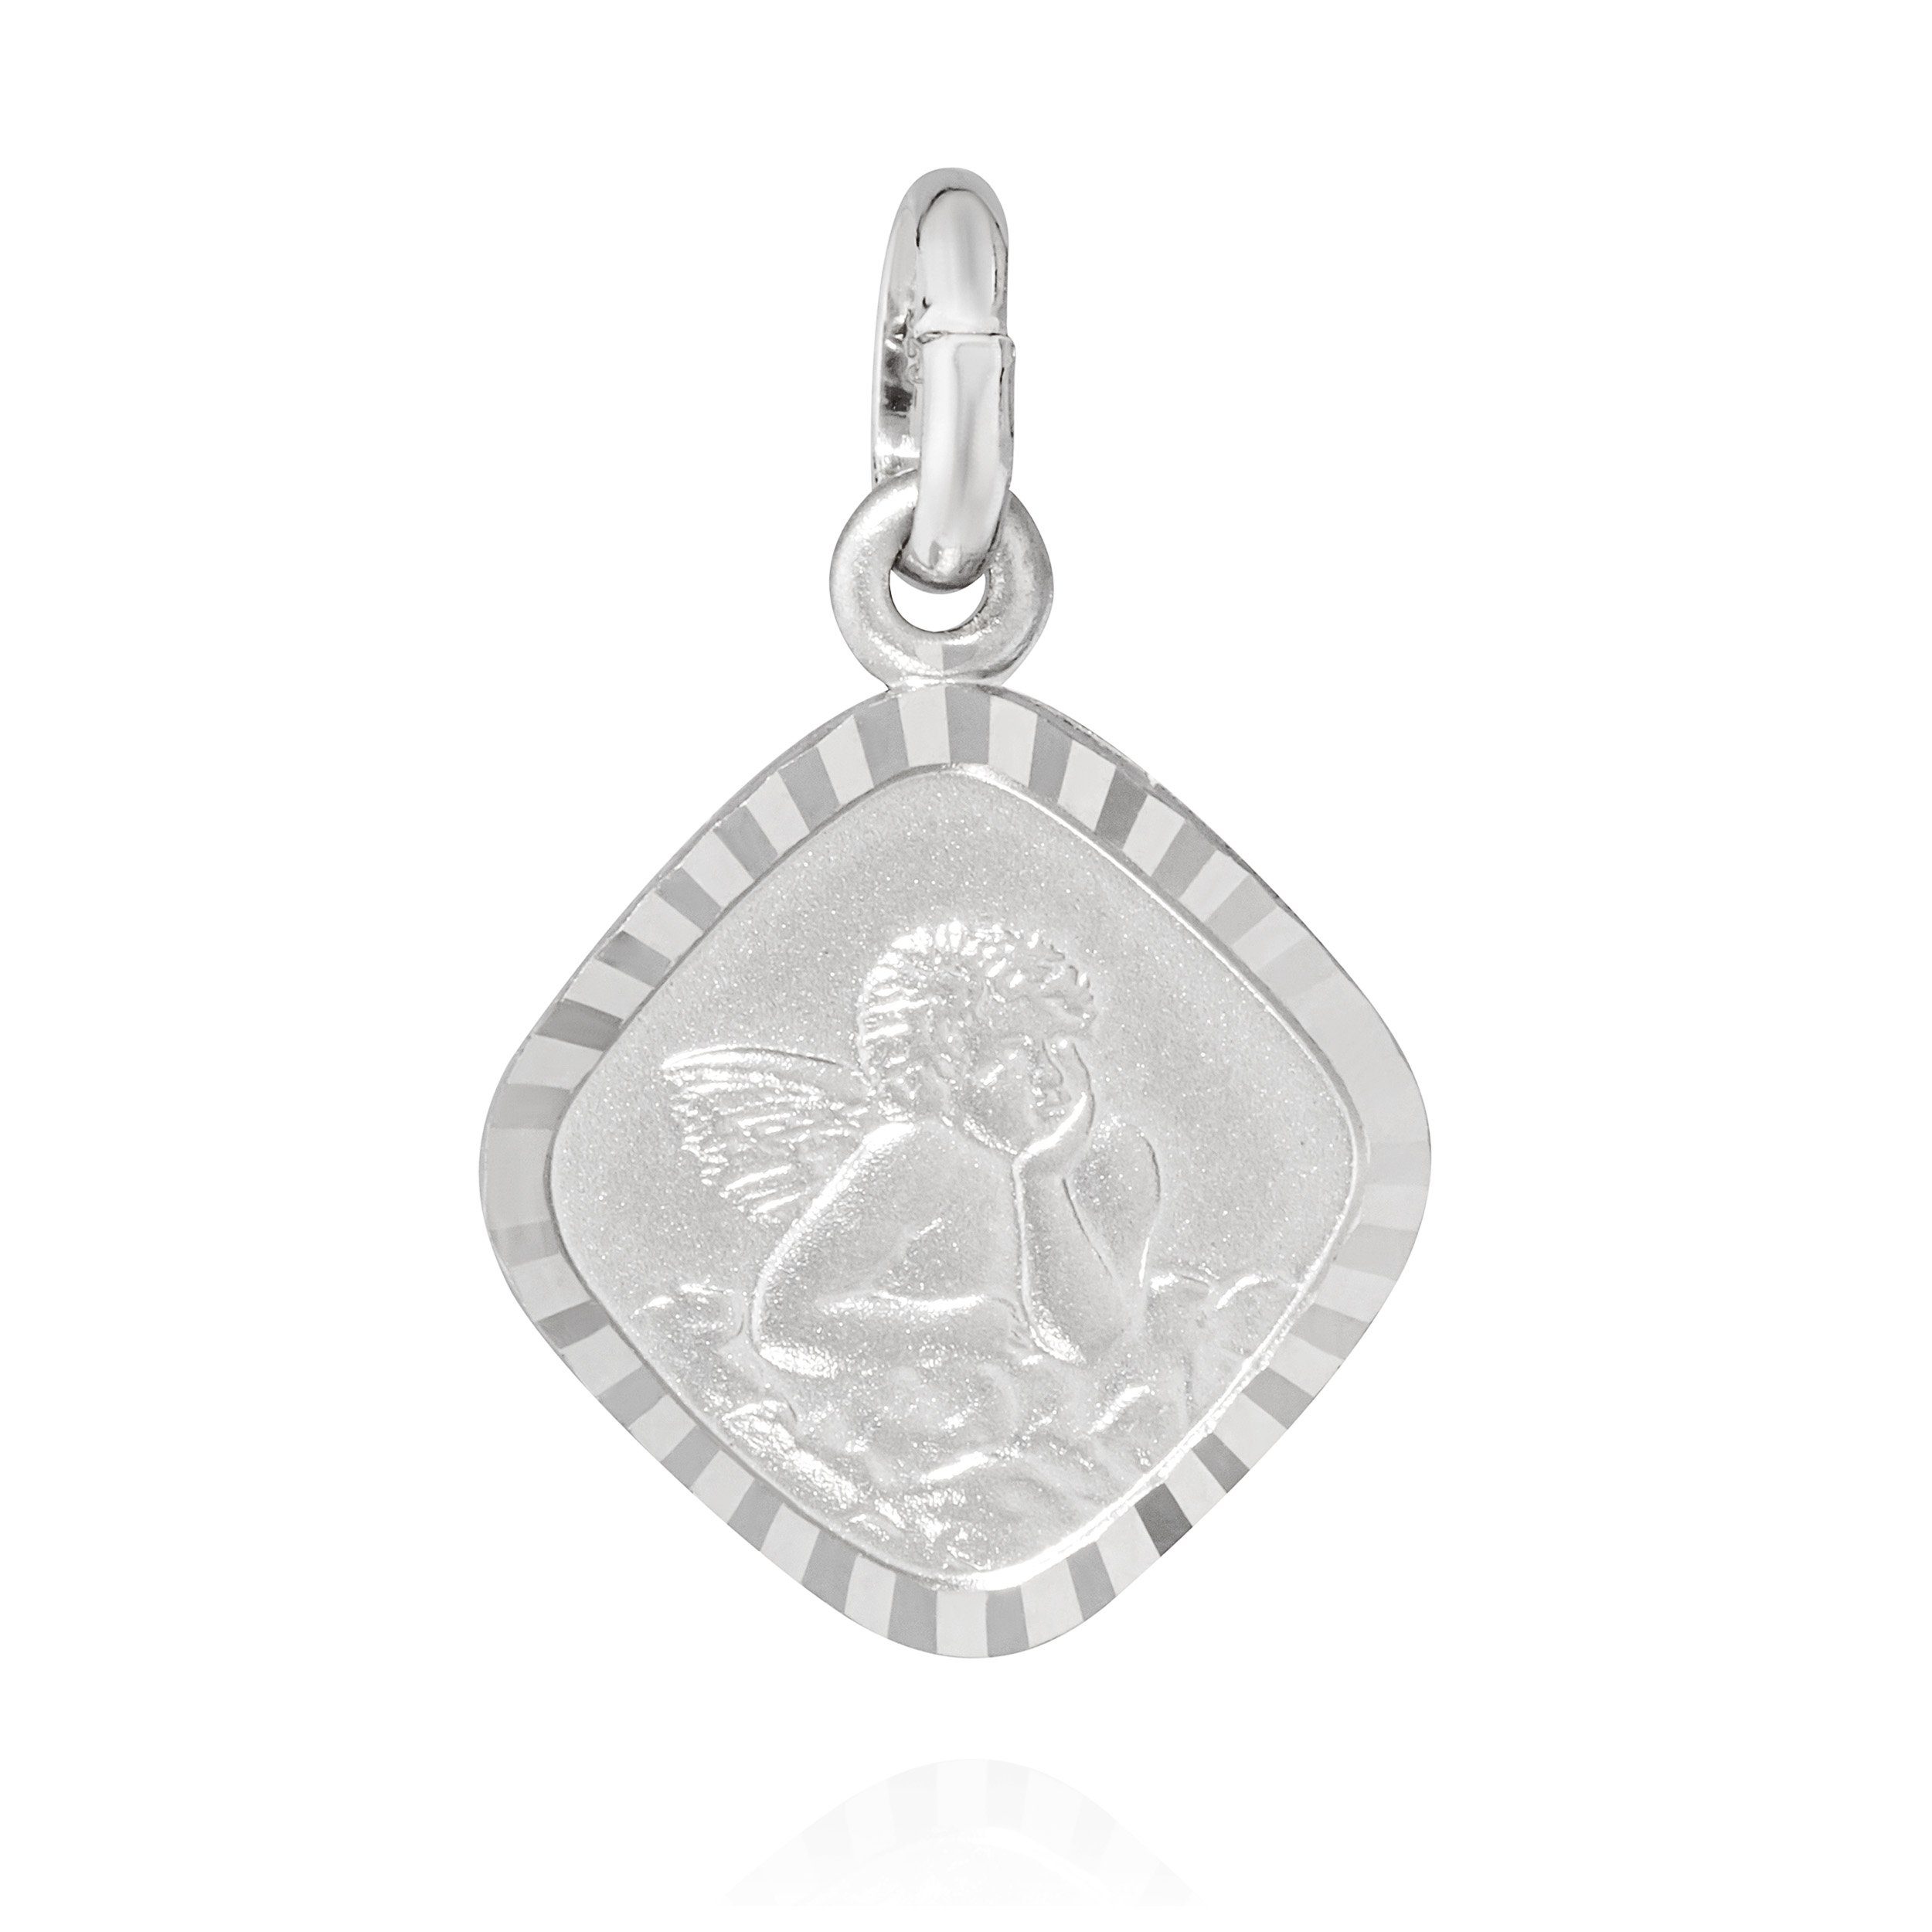 NKlaus Kettenanhänger Kettenanhänger Schutzengel 925 Silber matt  diamantiert 15x12mm Talisma | Kettenanhänger